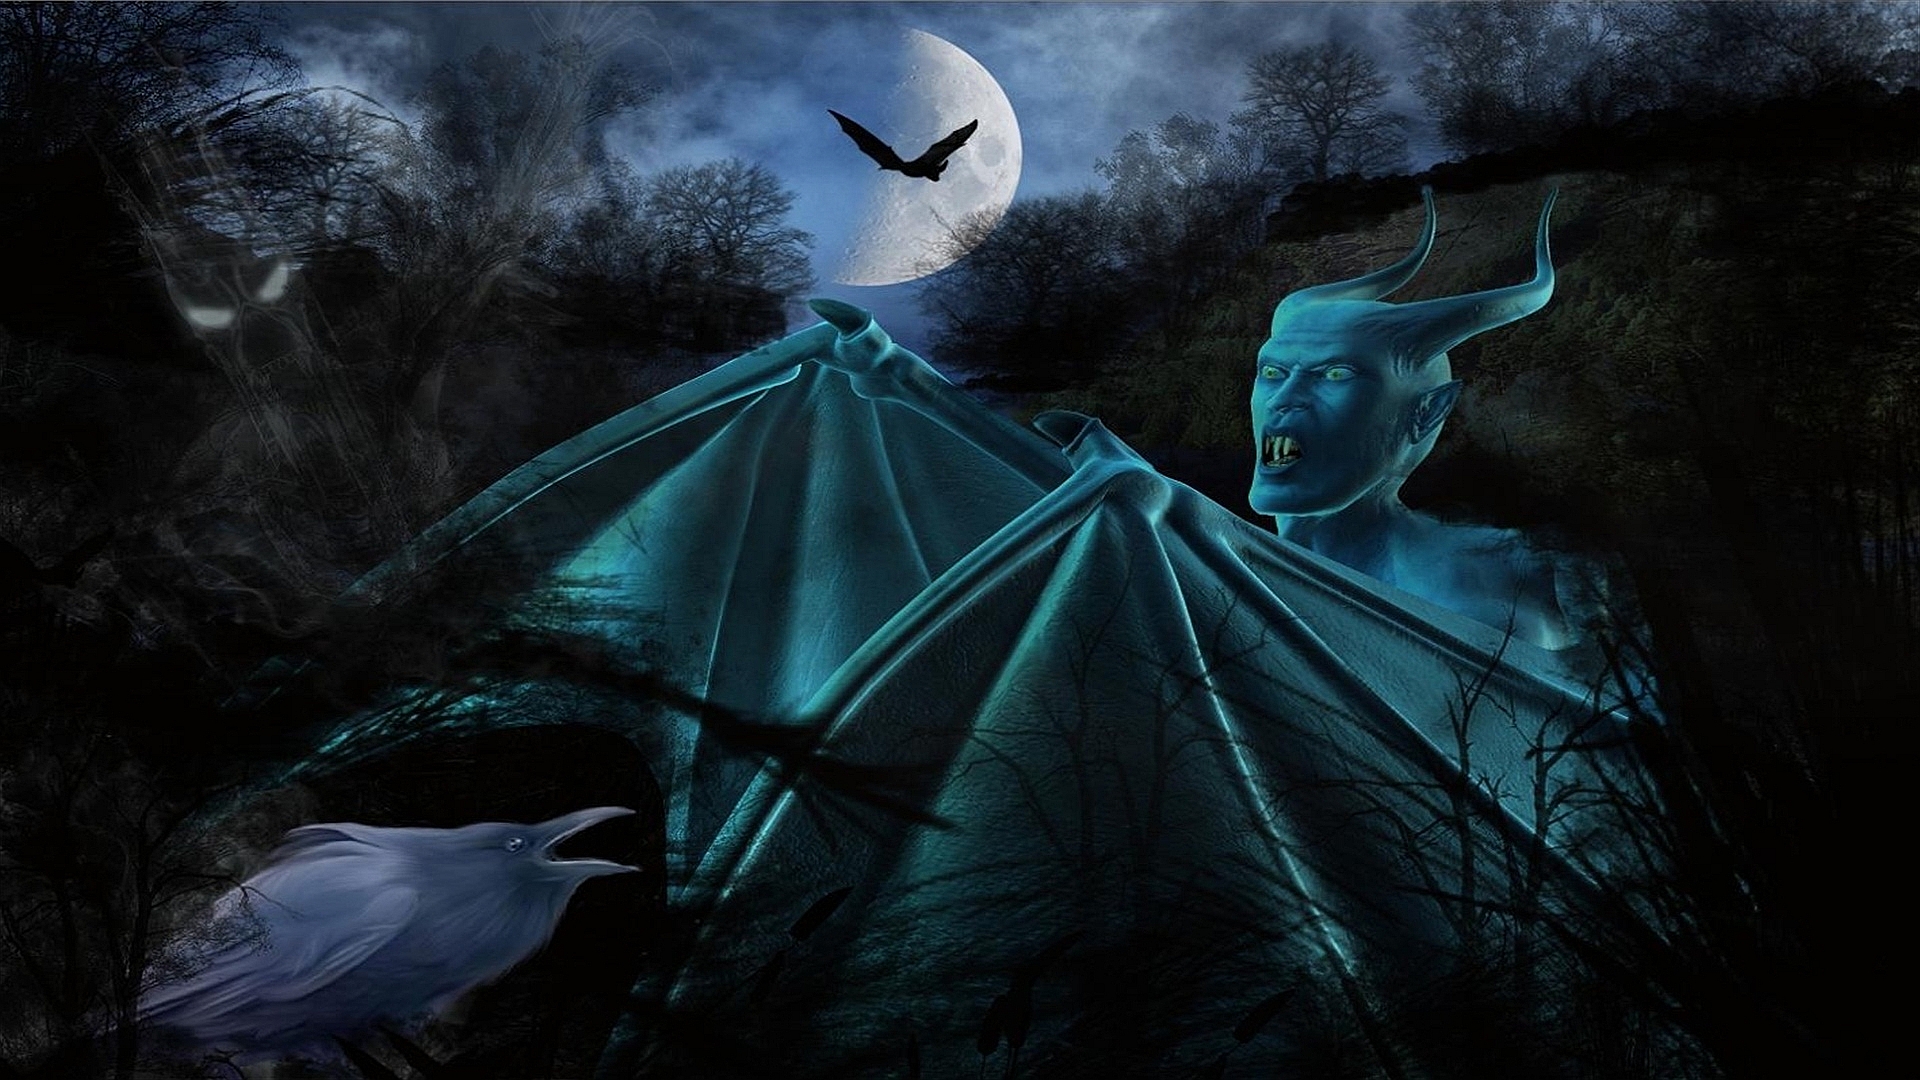 A haunting fantasy demon captured in this dark desktop wallpaper.